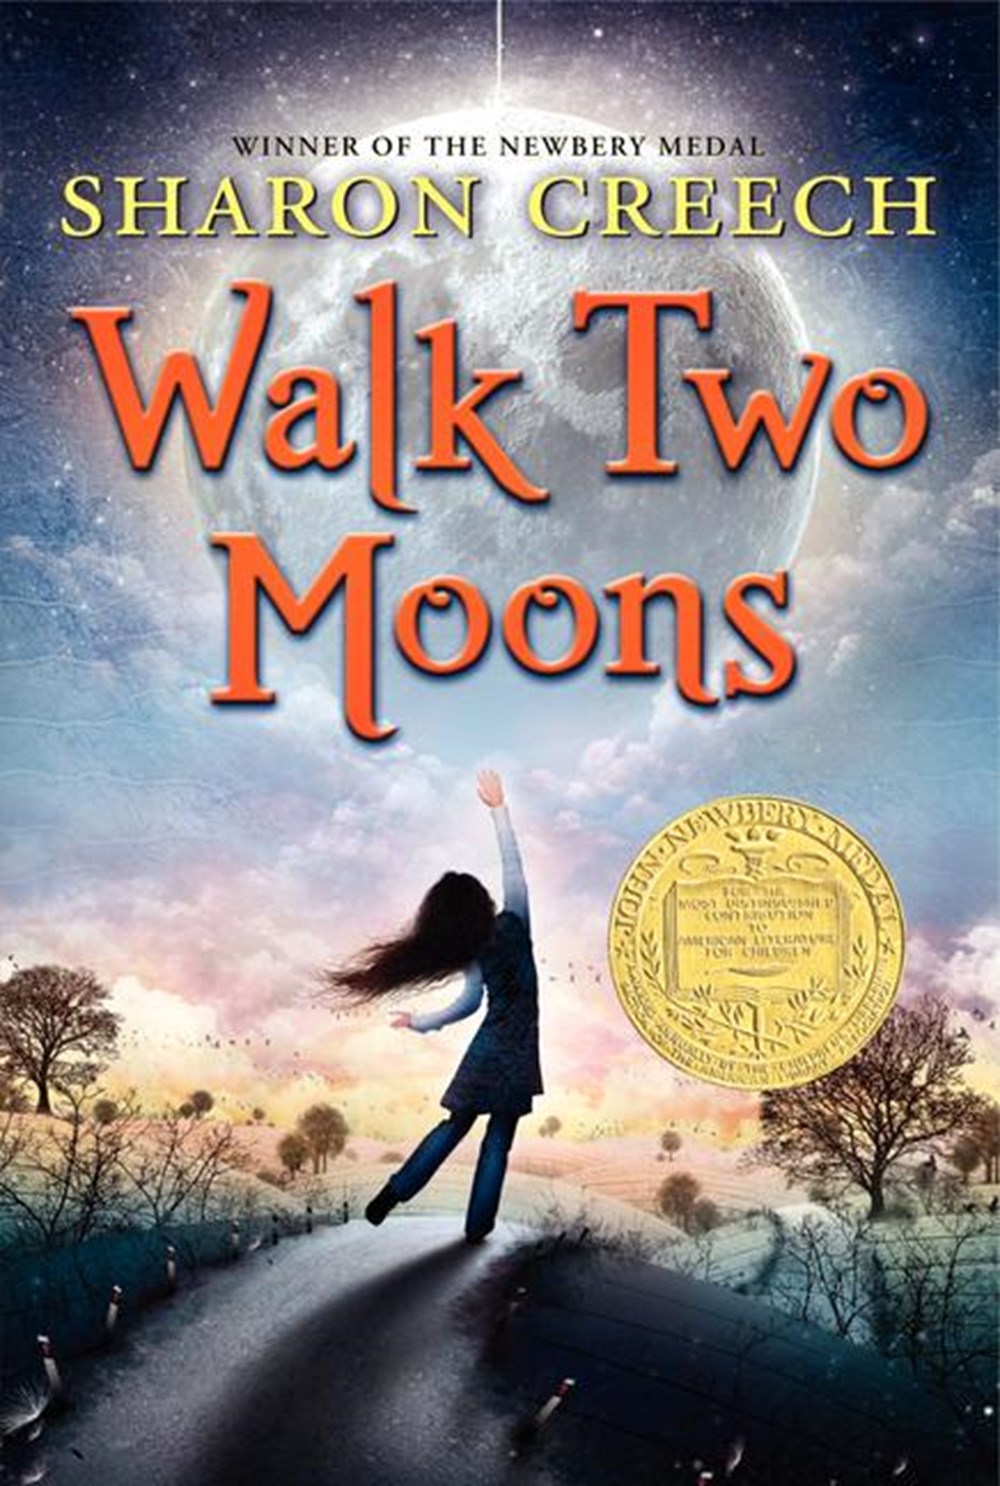 Walk Two Moons: A Newbery Award Winner